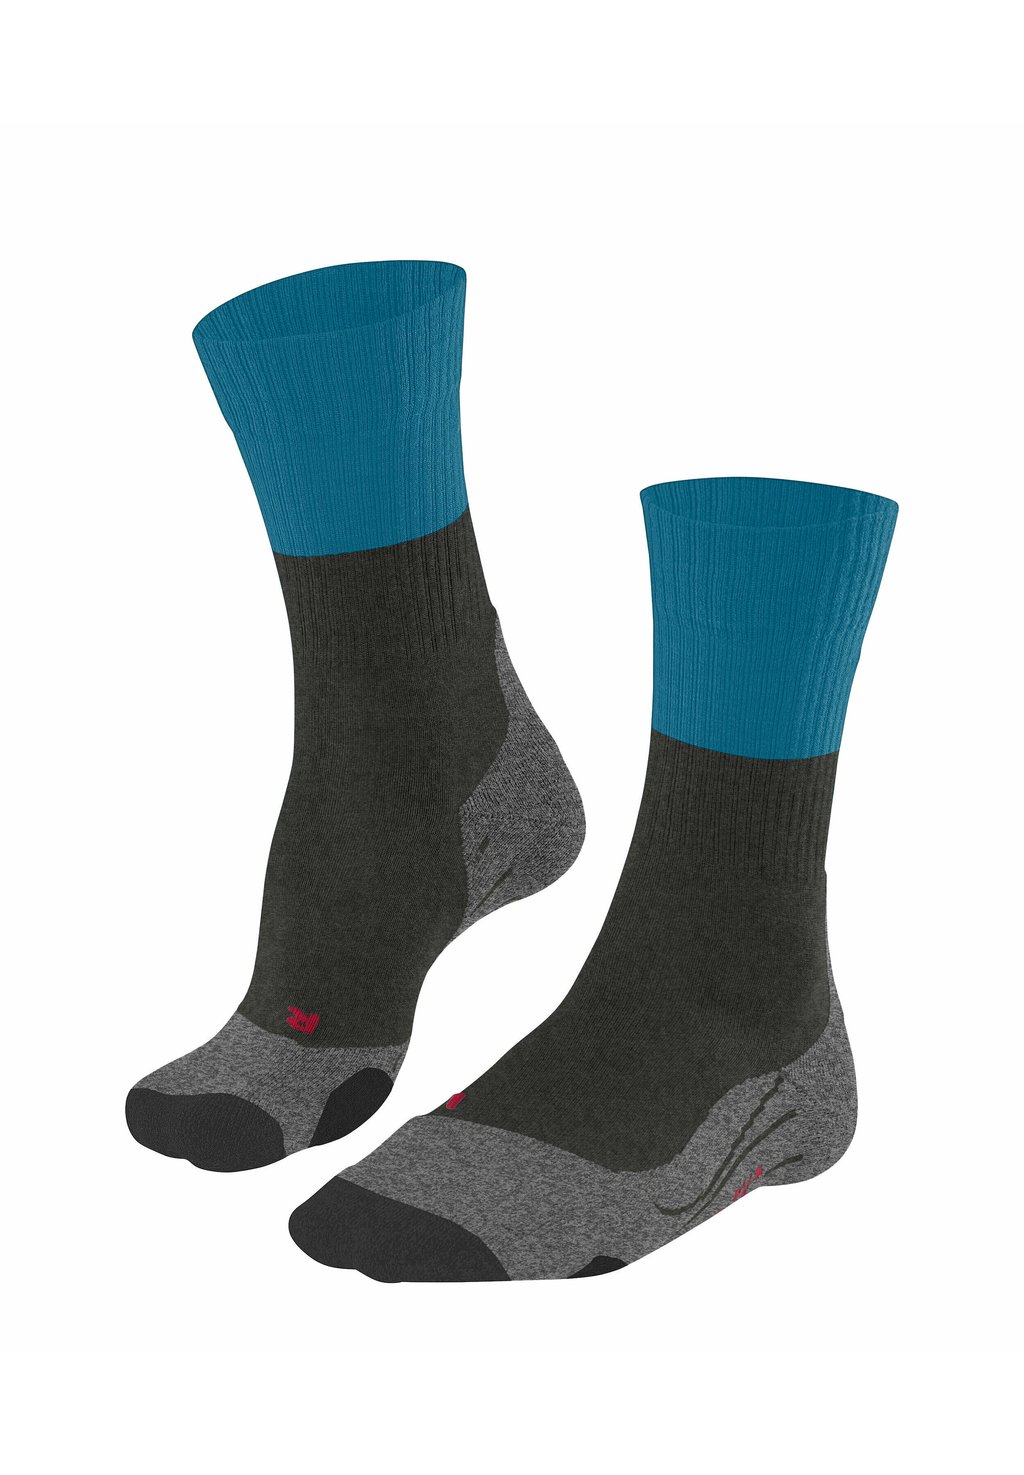 Спортивные носки TK2 Explore Trekking Functional средней мягкости FALKE, цвет grau